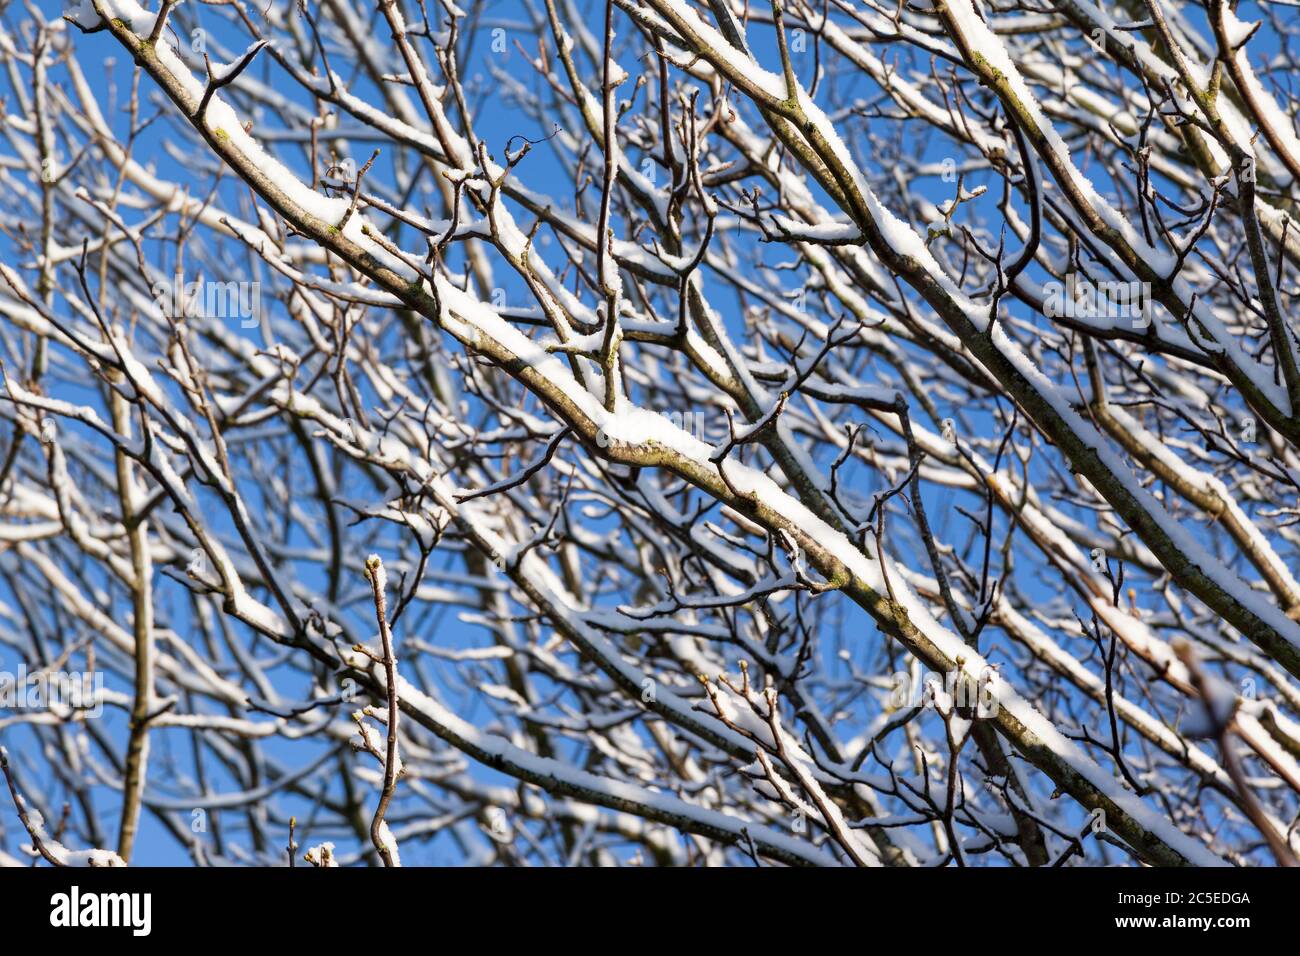 Primer plano de ramas de árboles cubiertas de nieve con un fondo azul cielo. Enfoque selectivo en ramas de primer plano. Foto de stock